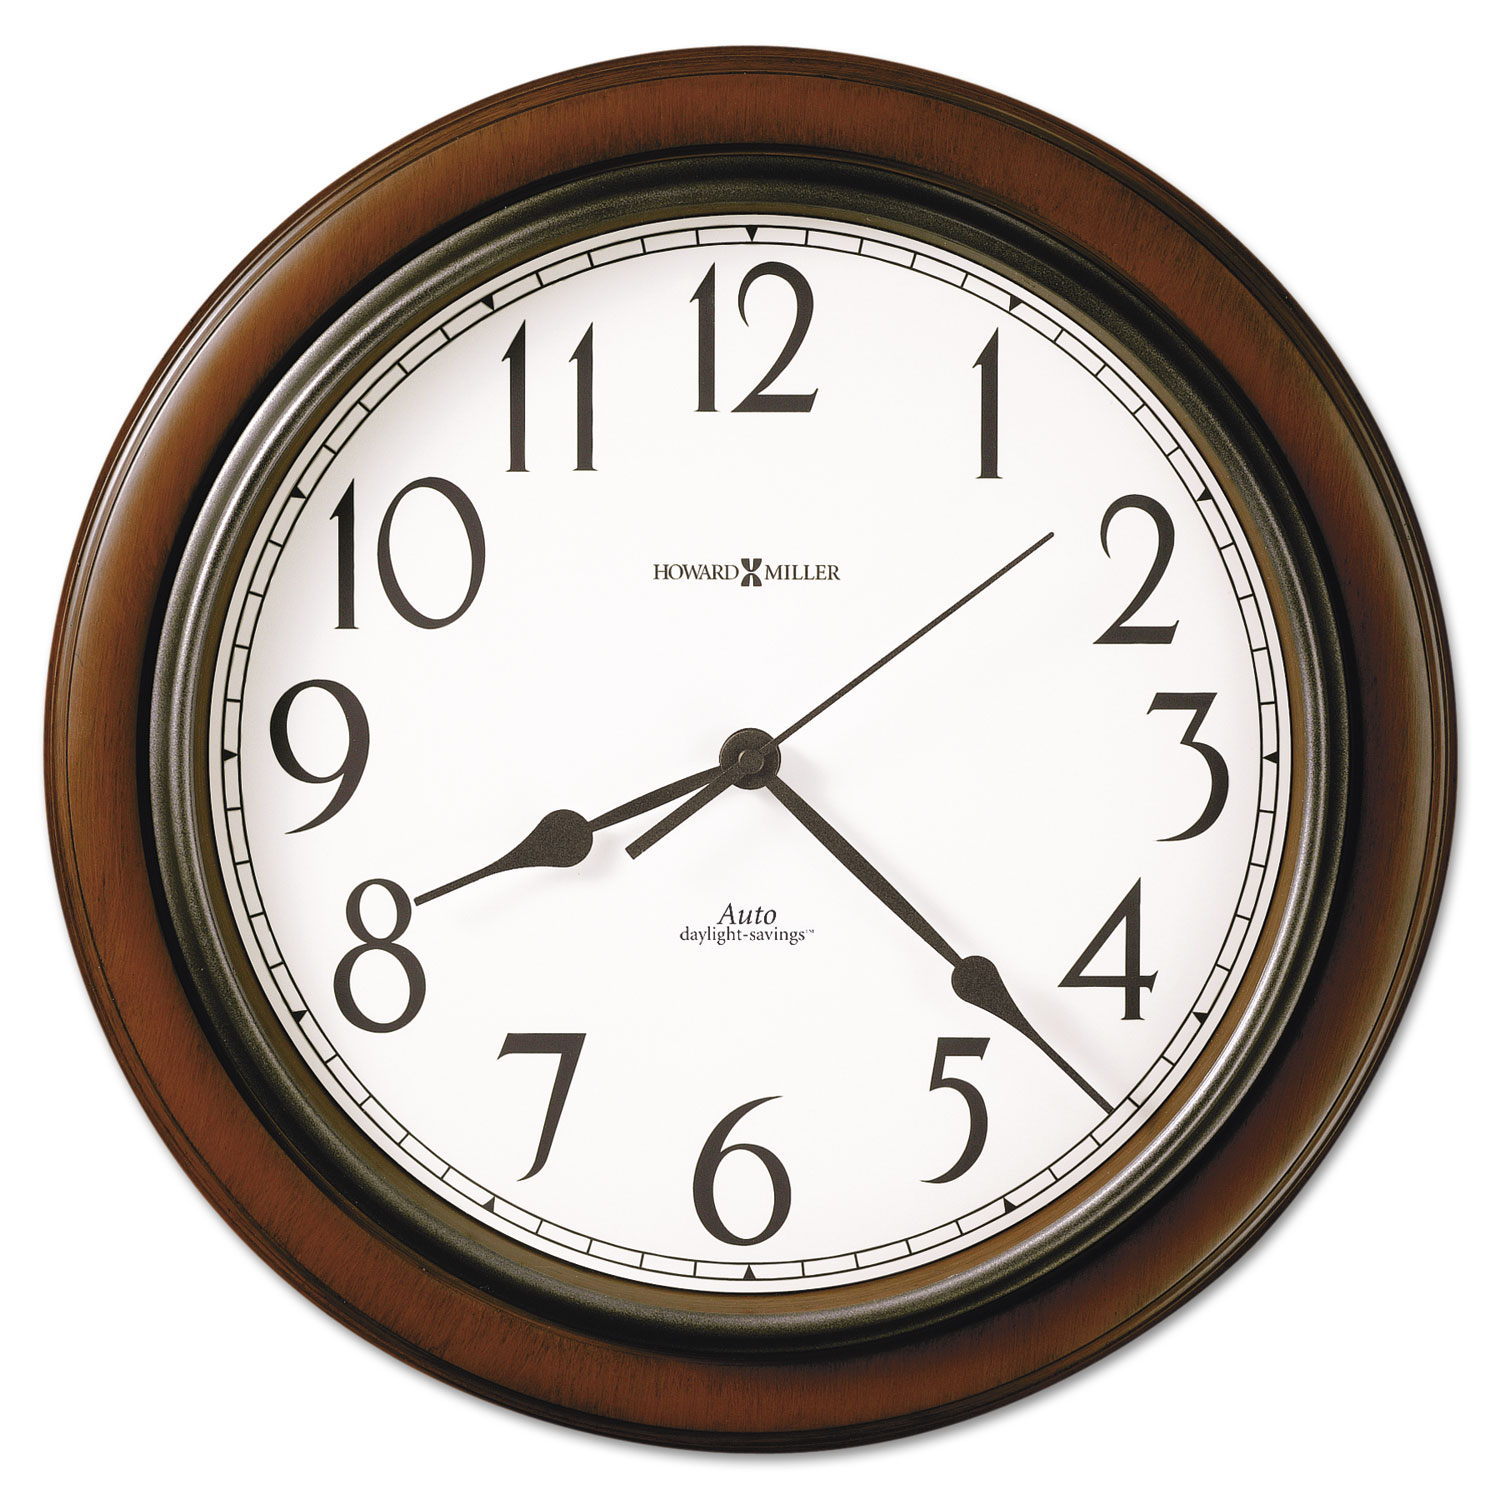 Talon Auto Daylight-Savings Wall Clock, 15.25" Overall Diameter, Cherry Case, 1 AA (sold separately)